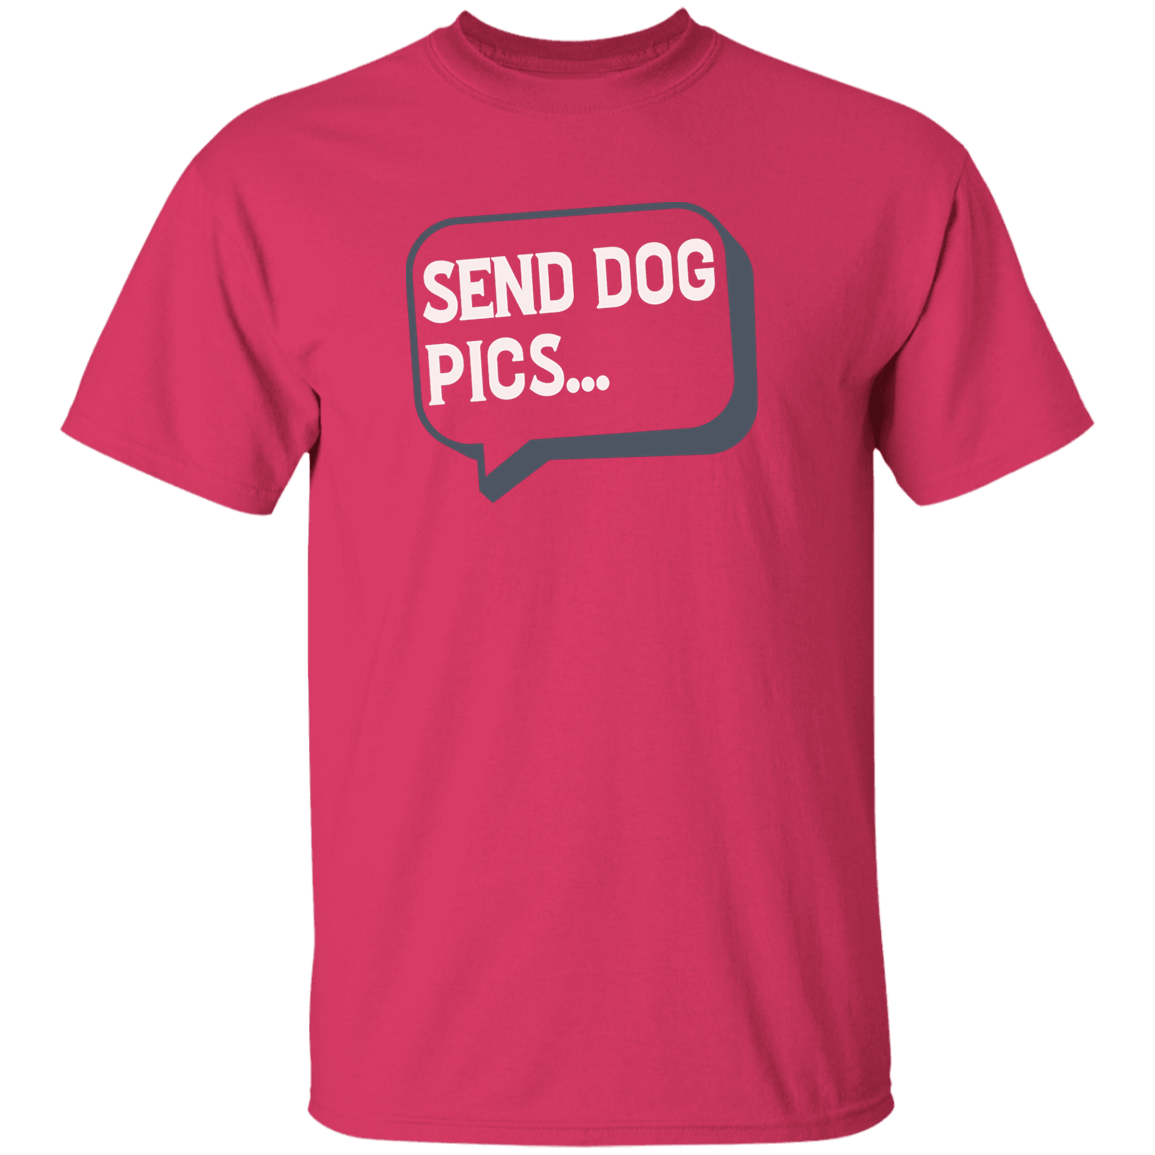 Send Dog Pics - T Shirt.